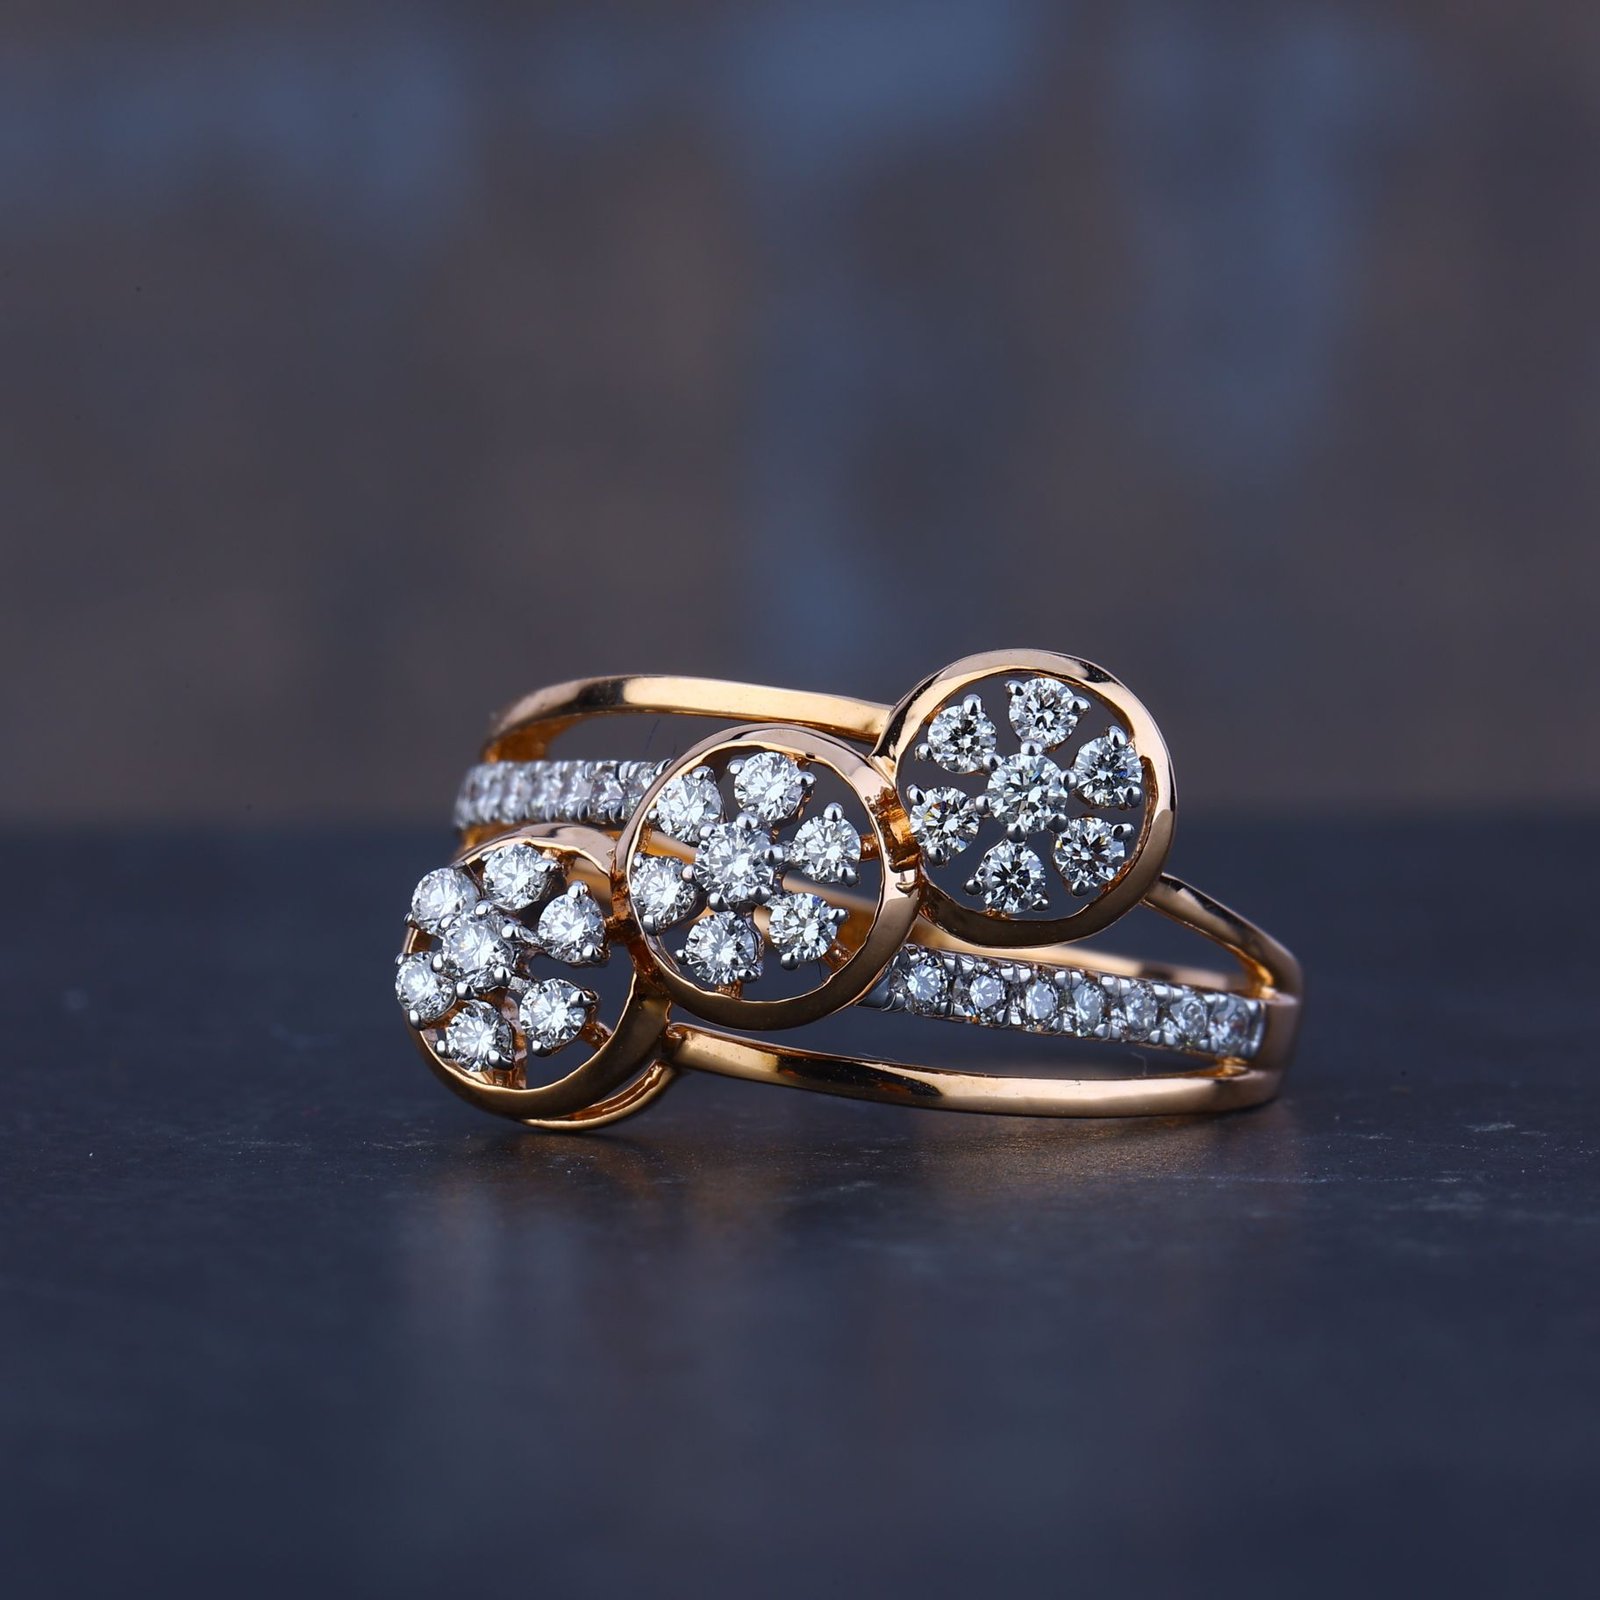 Buy 18k Yellow Gold Diamond Ring Band, Handmade Yellow Gold Ring, Single Diamond  Gold Ring, Earth Mined Natural Diamond Online in India - Etsy